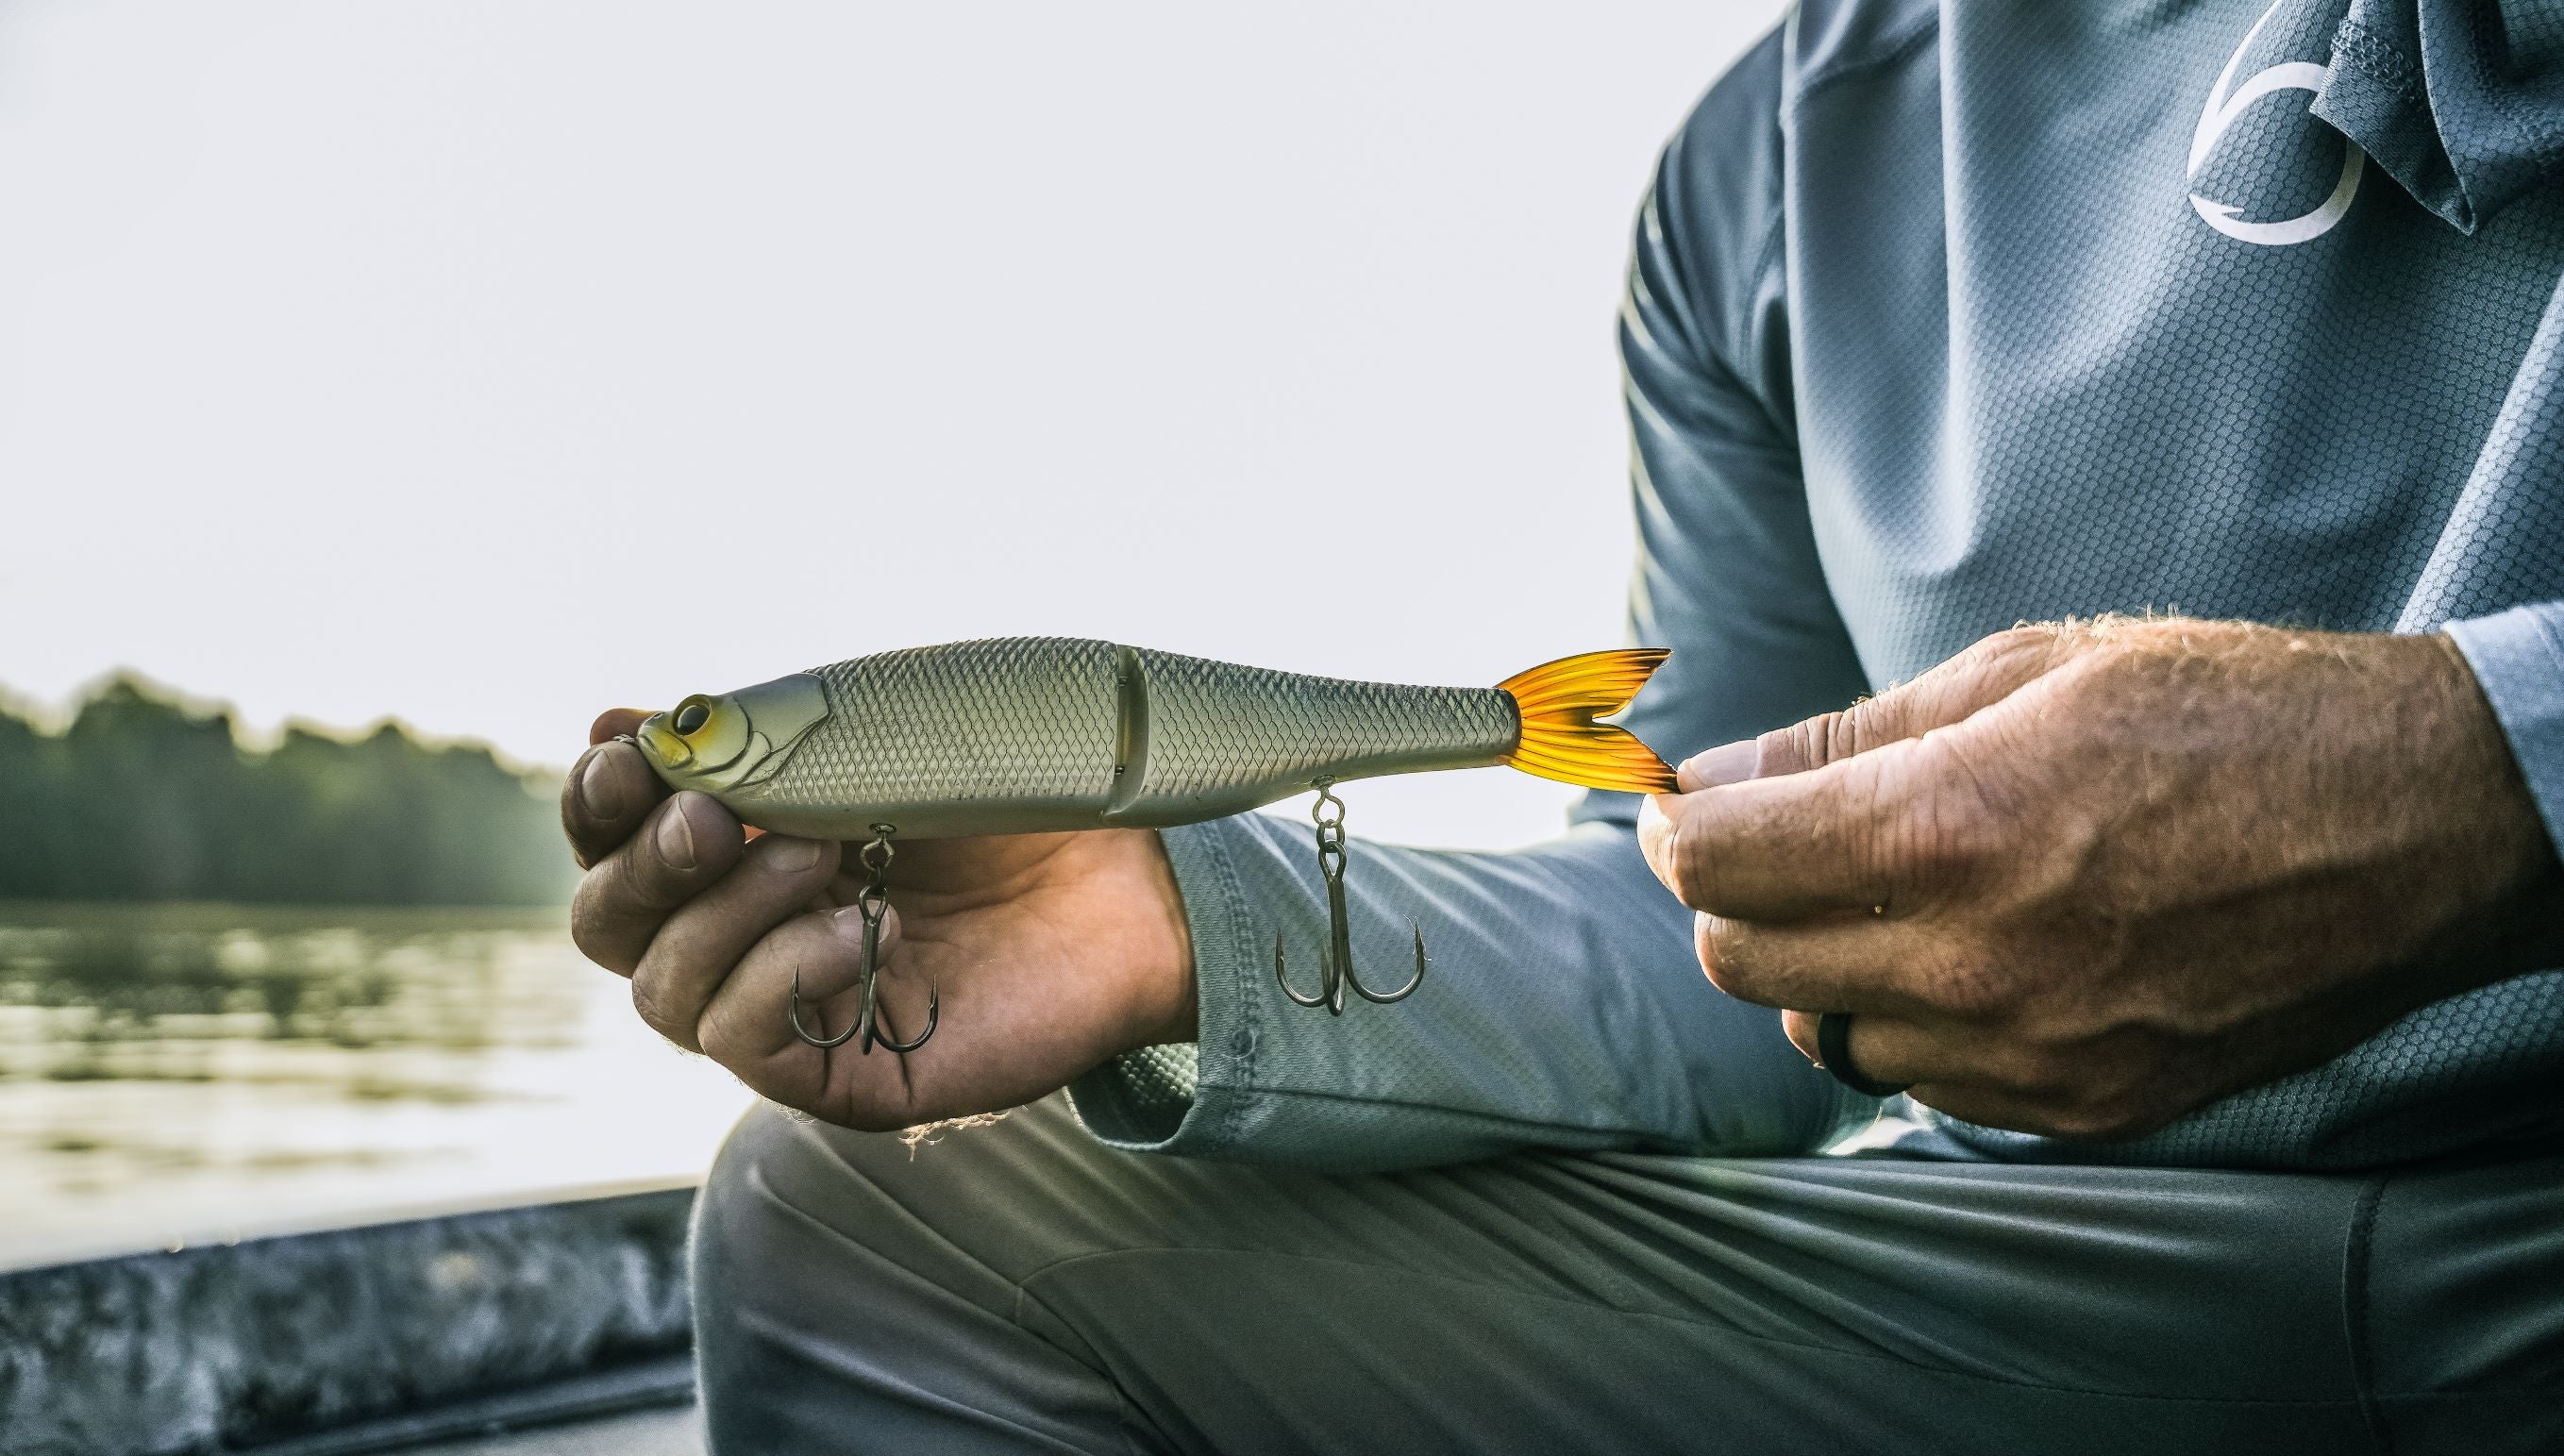 6th Sense Fishing - Spraying some custom gills to get ready for